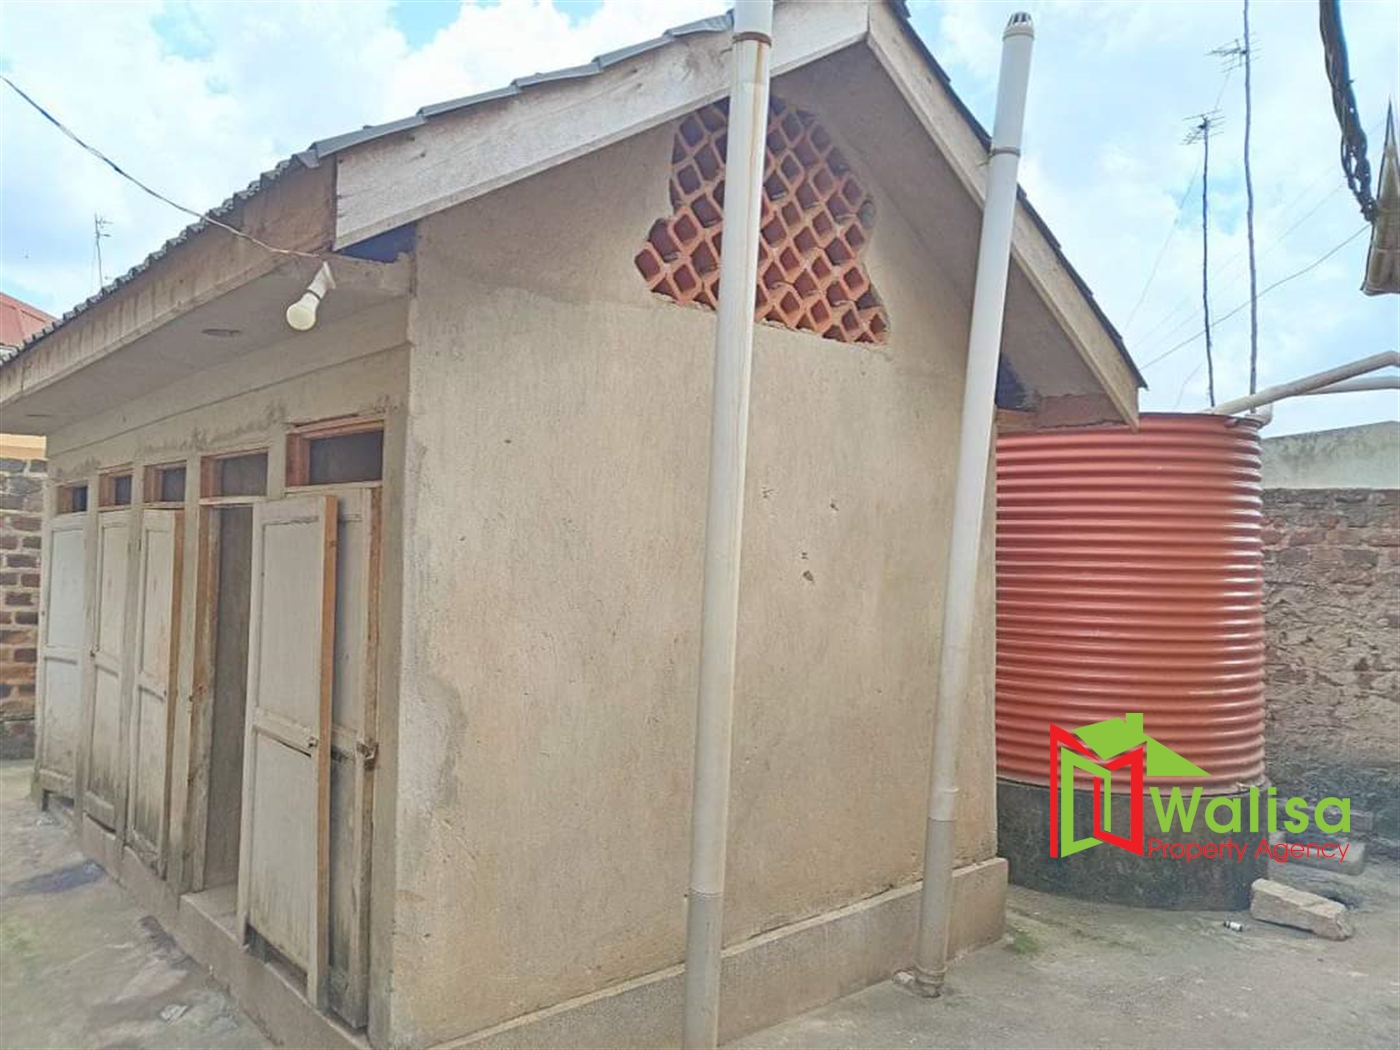 Rental units for sale in Kitete Mukono